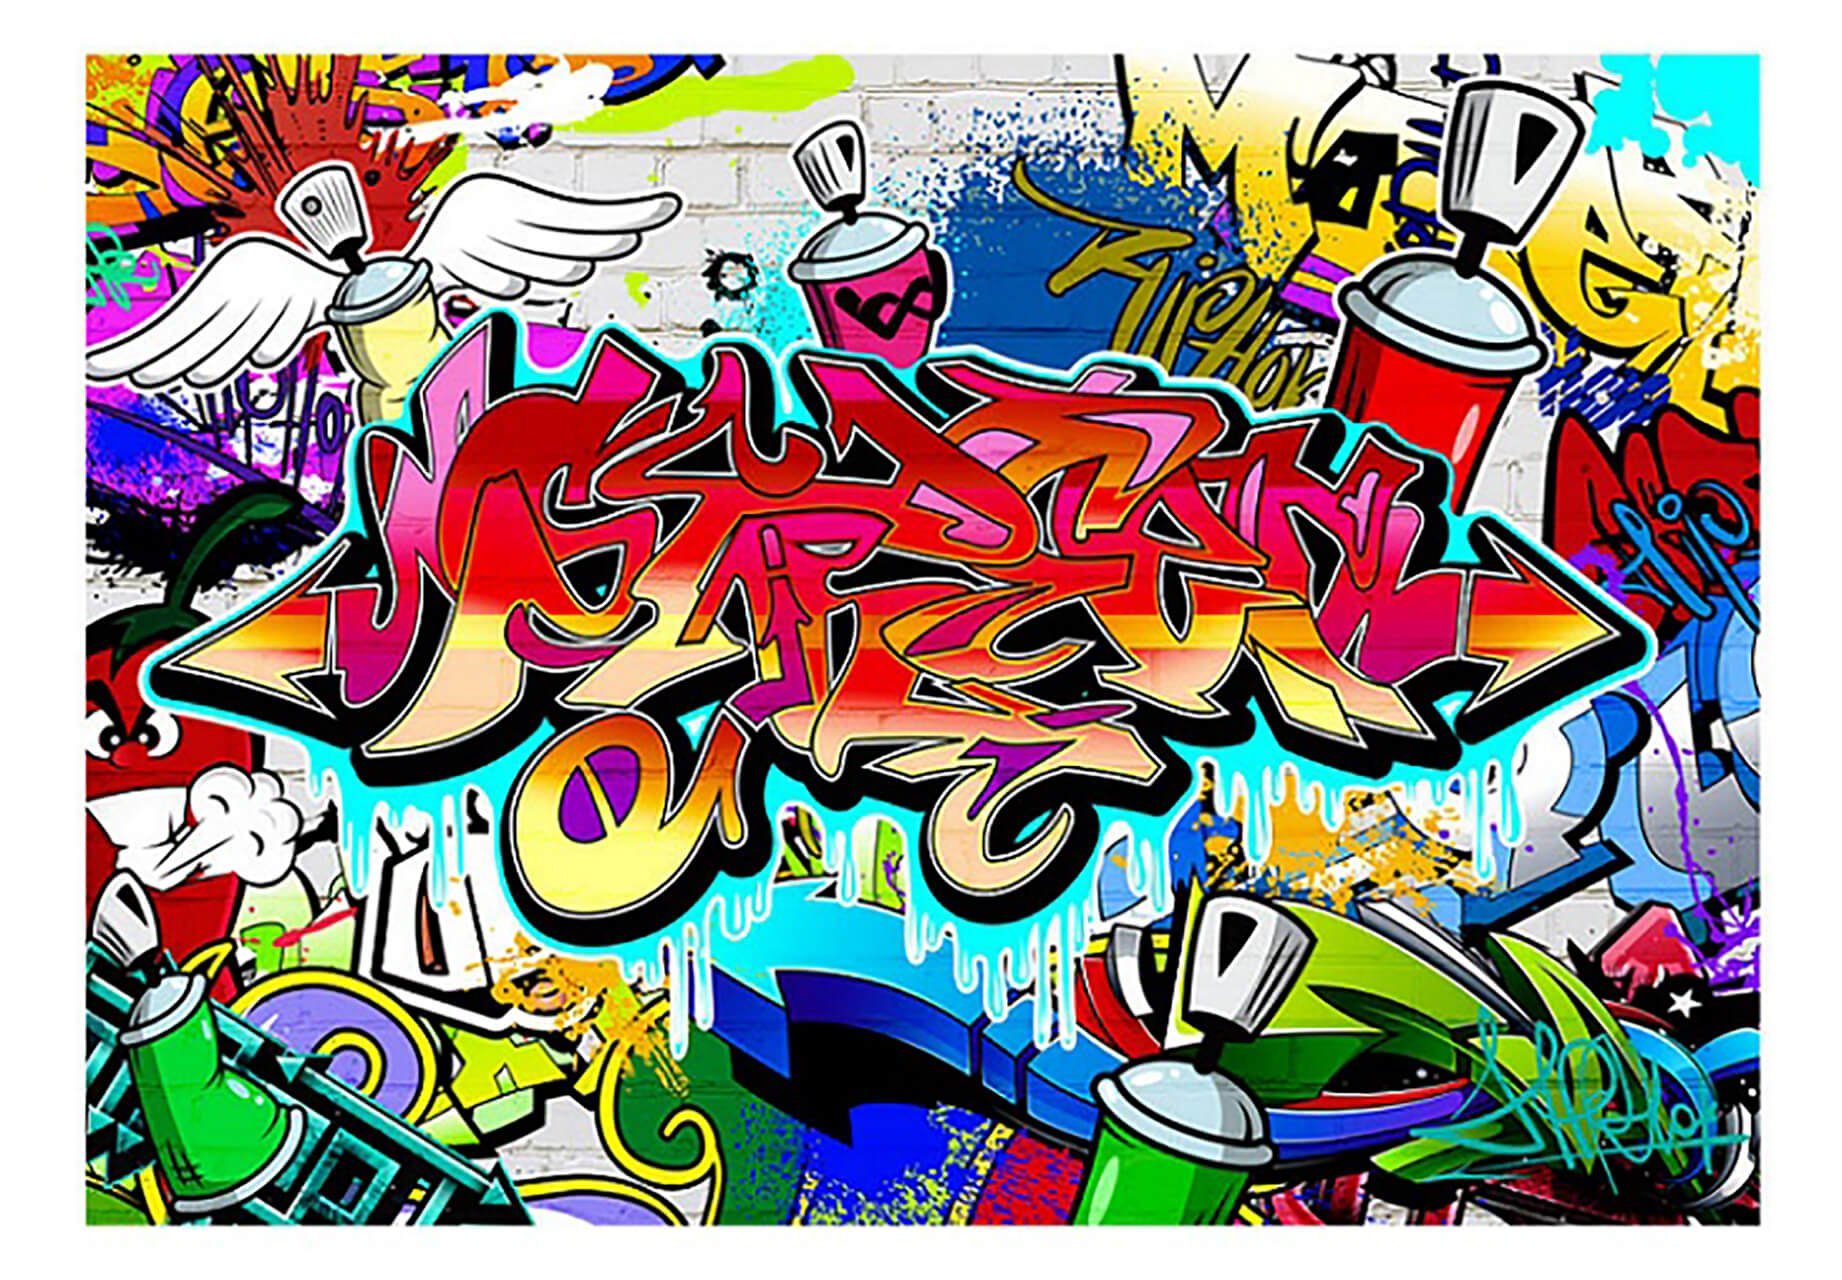 KUNSTLOFT Vliestapete Graffiti Madness 1.5x1.05 m, halb-matt, lichtbeständige Design Tapete